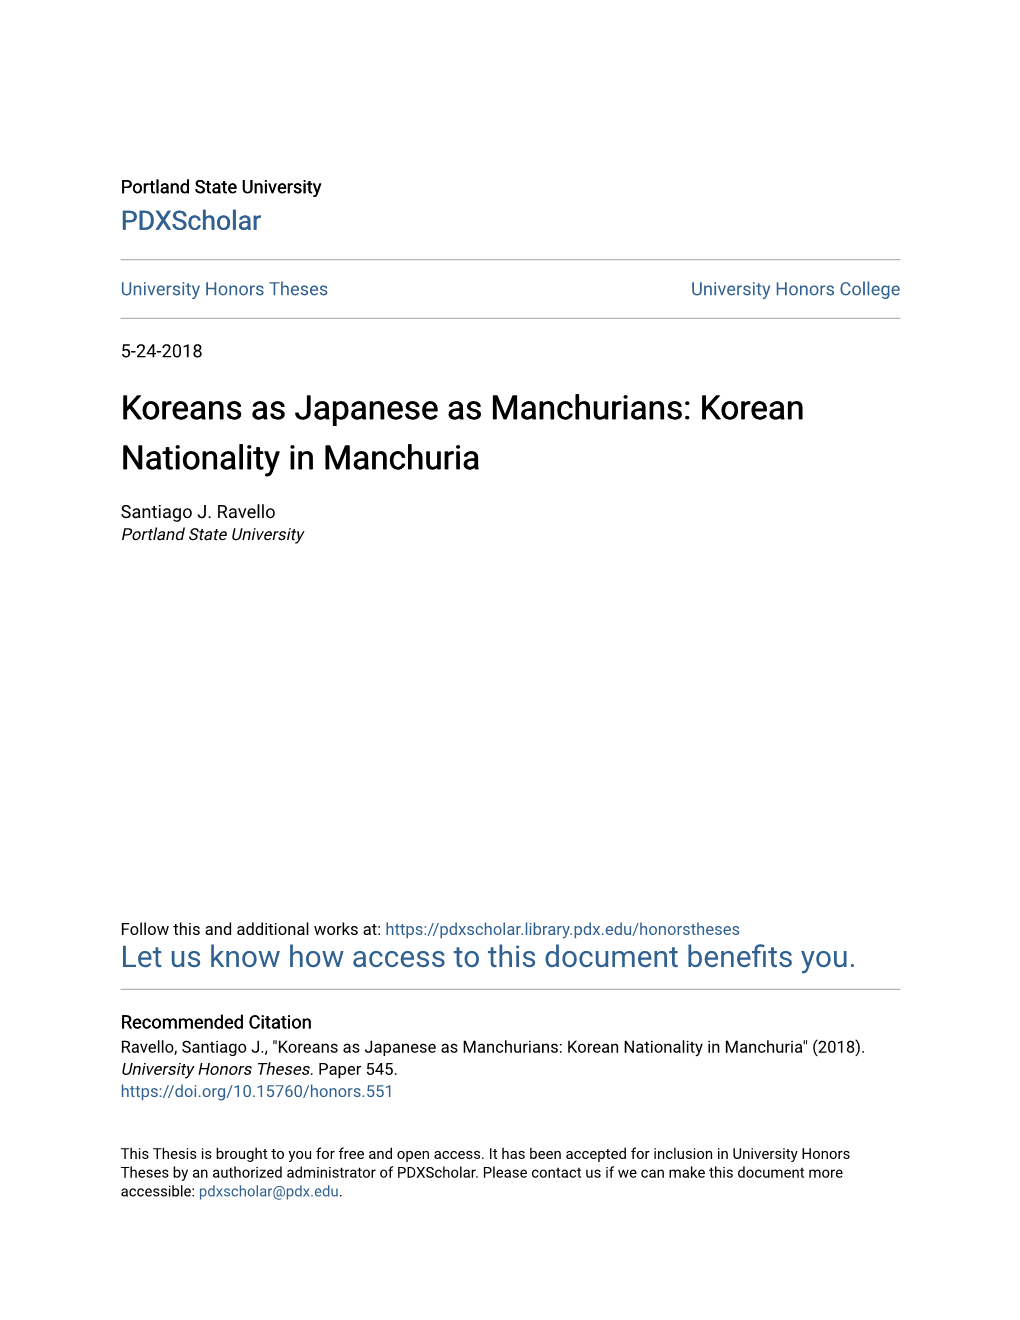 Koreans As Japanese As Manchurians: Korean Nationality in Manchuria